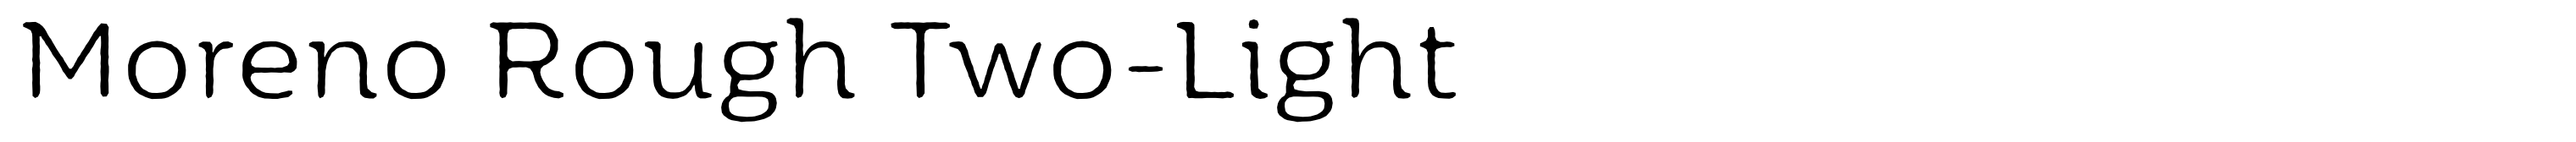 Moreno Rough Two-Light